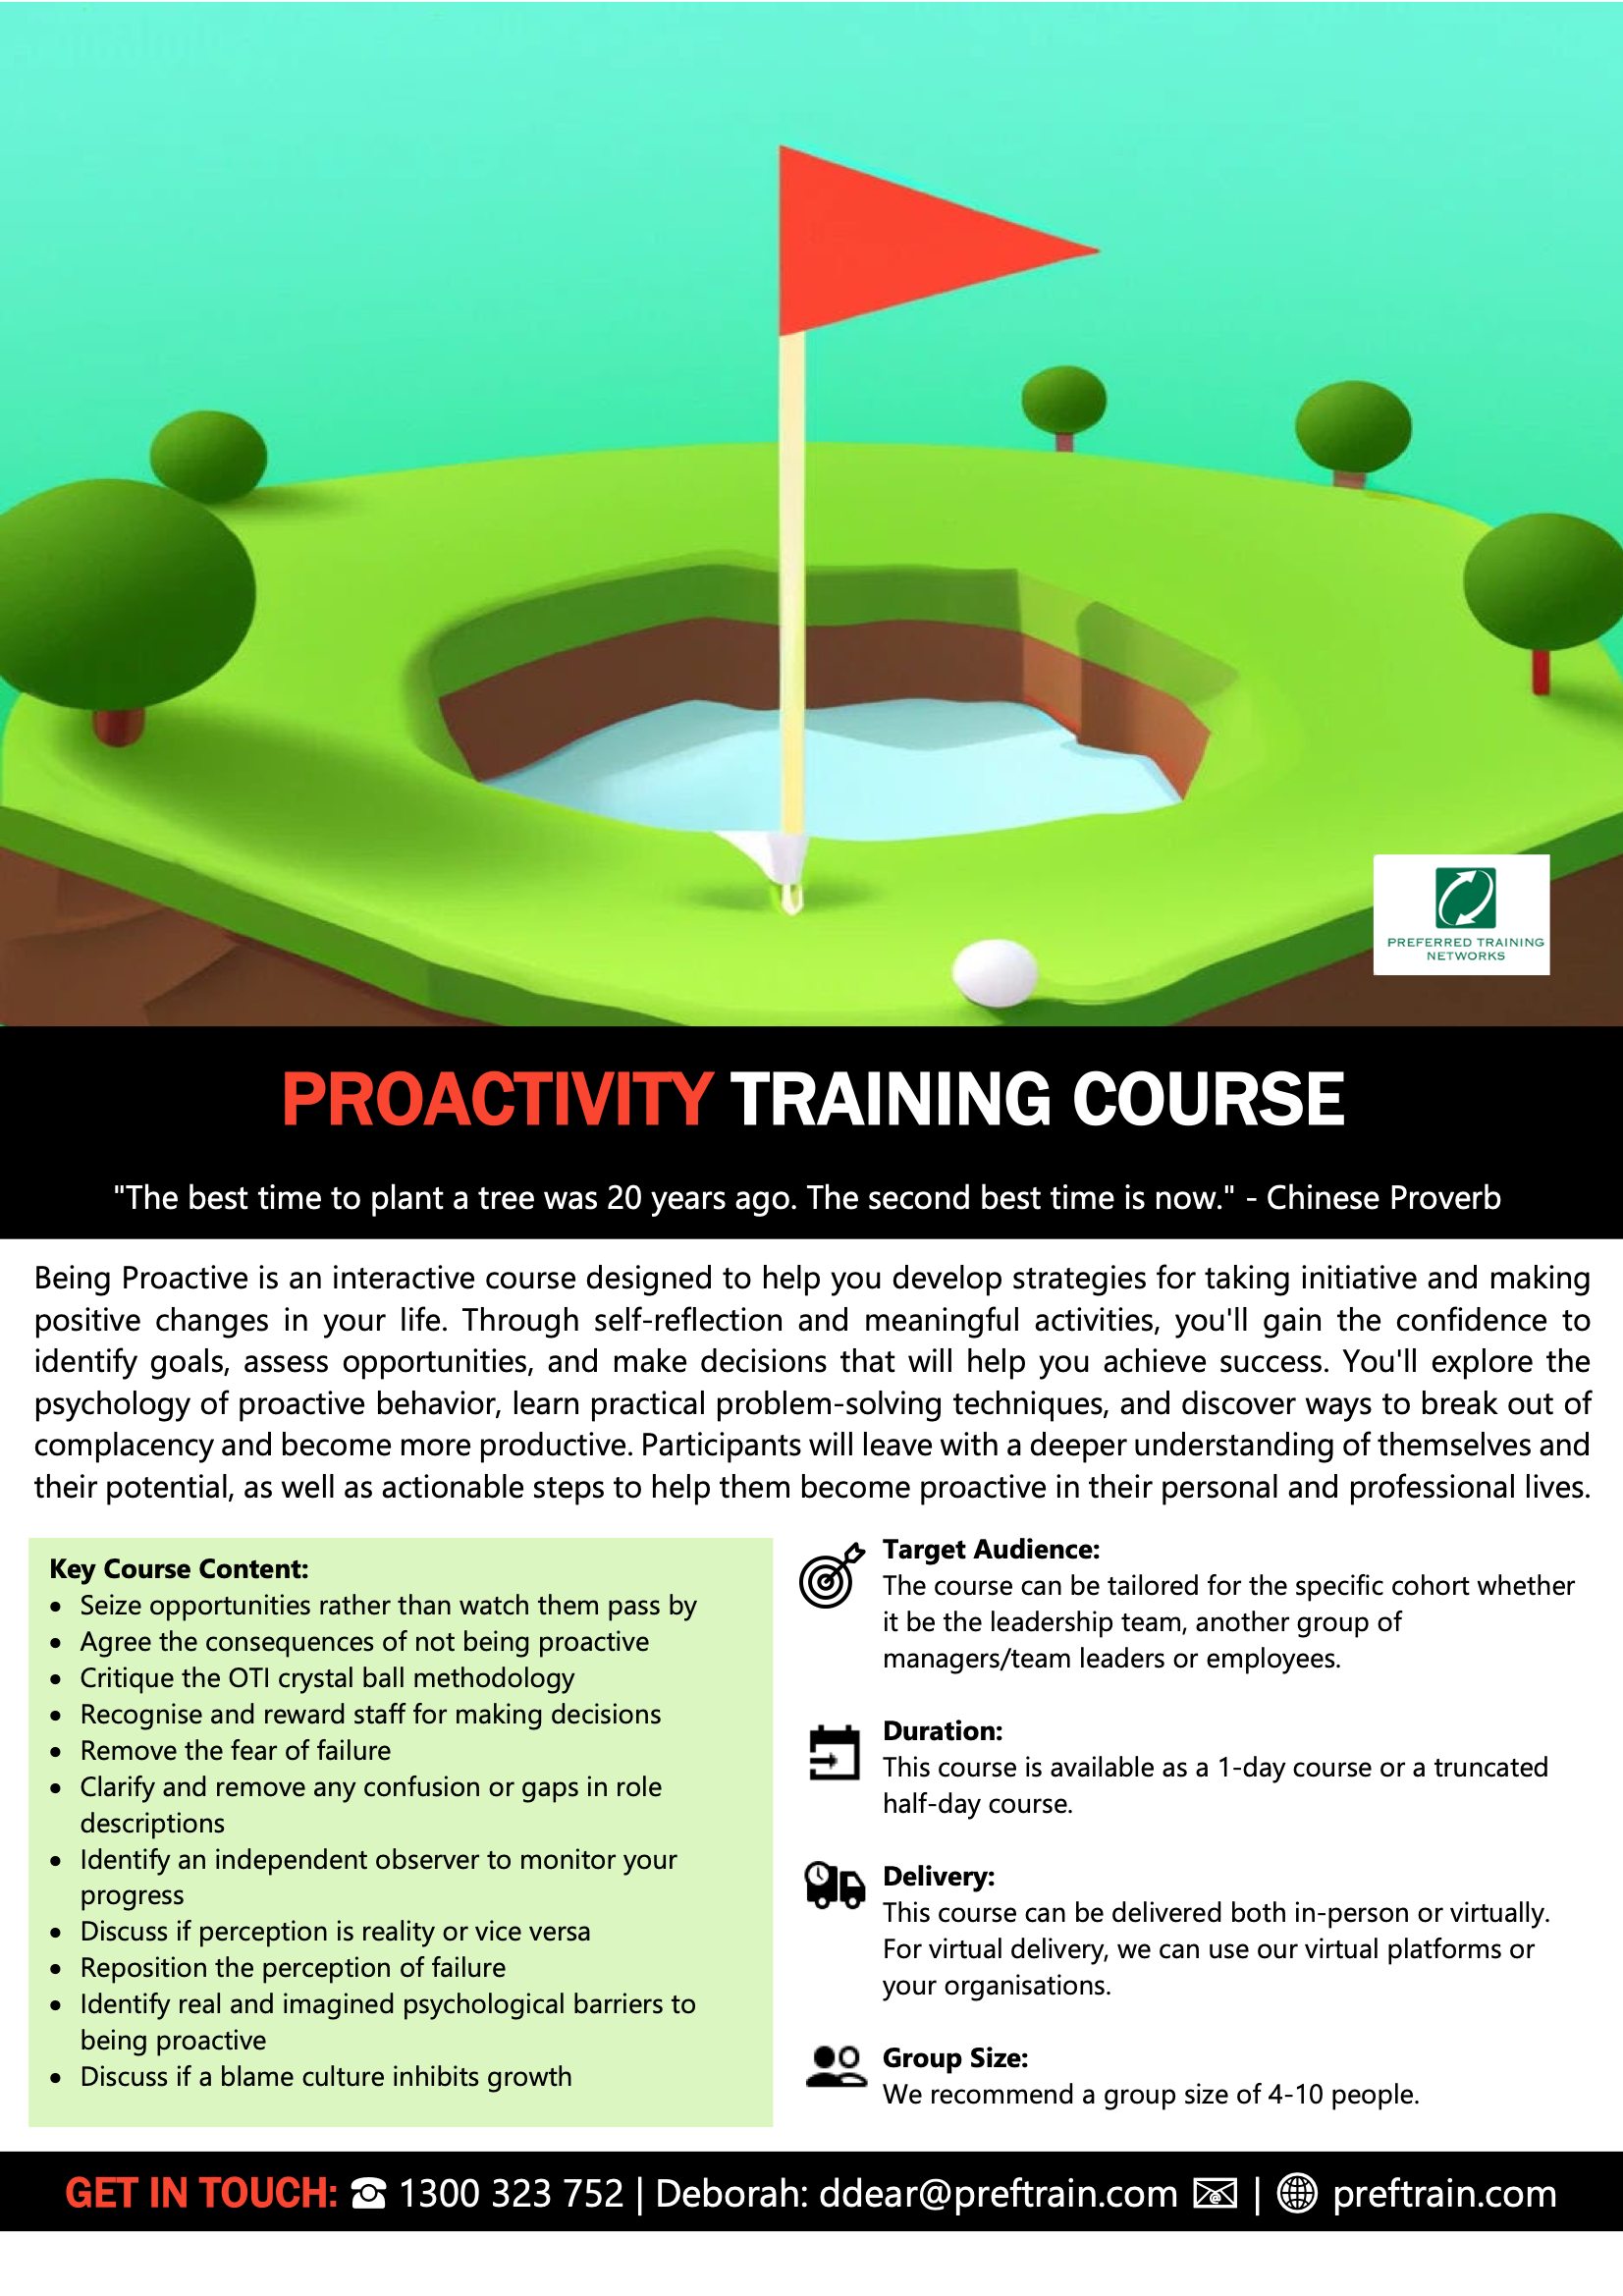 Proactivity Training Course